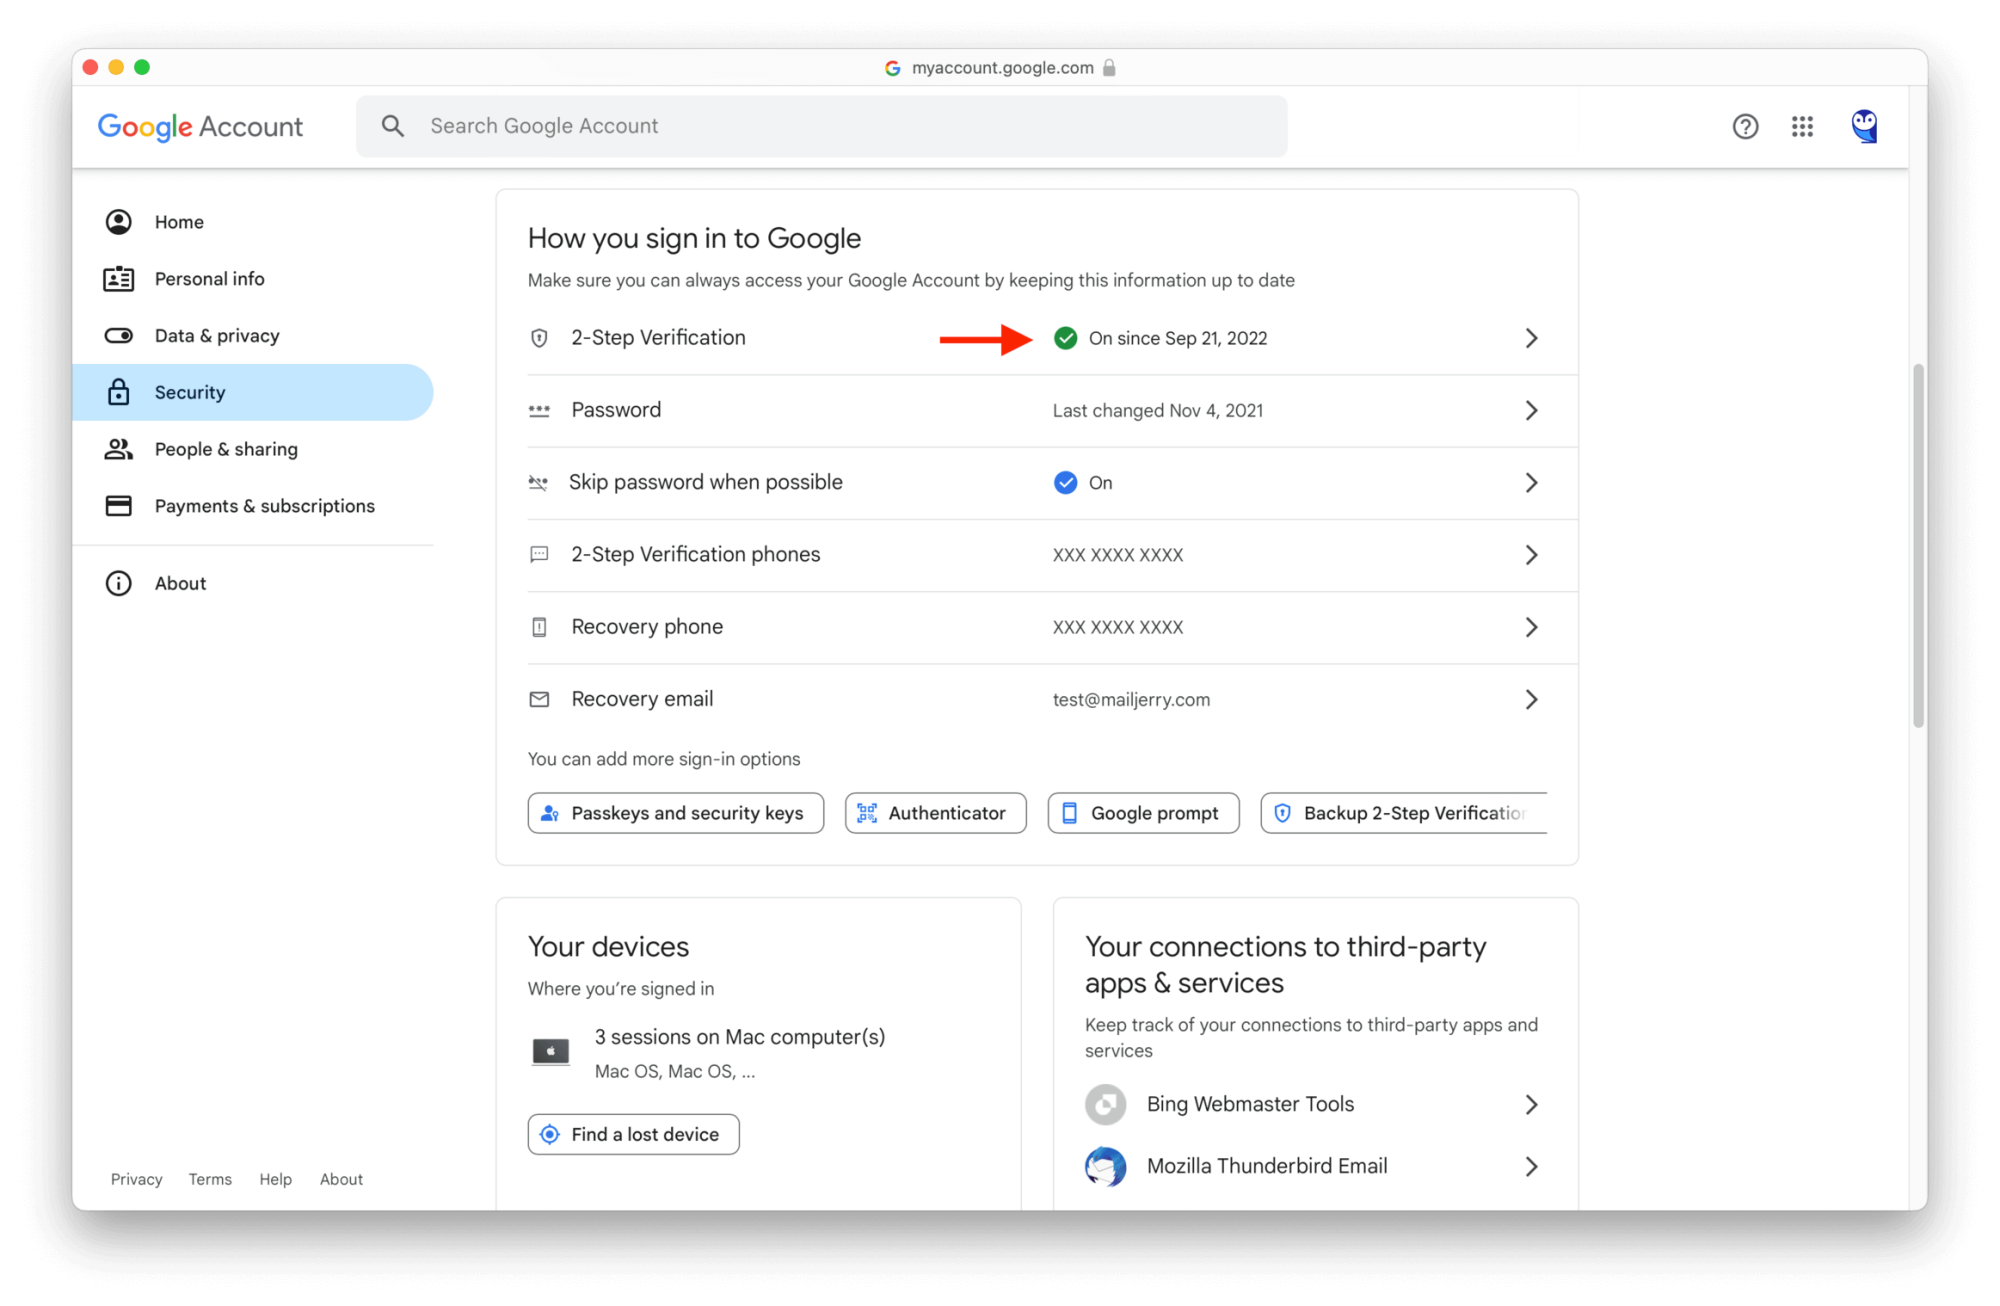 Gmail Migration: Create App Password – Enable 2-Step Verification